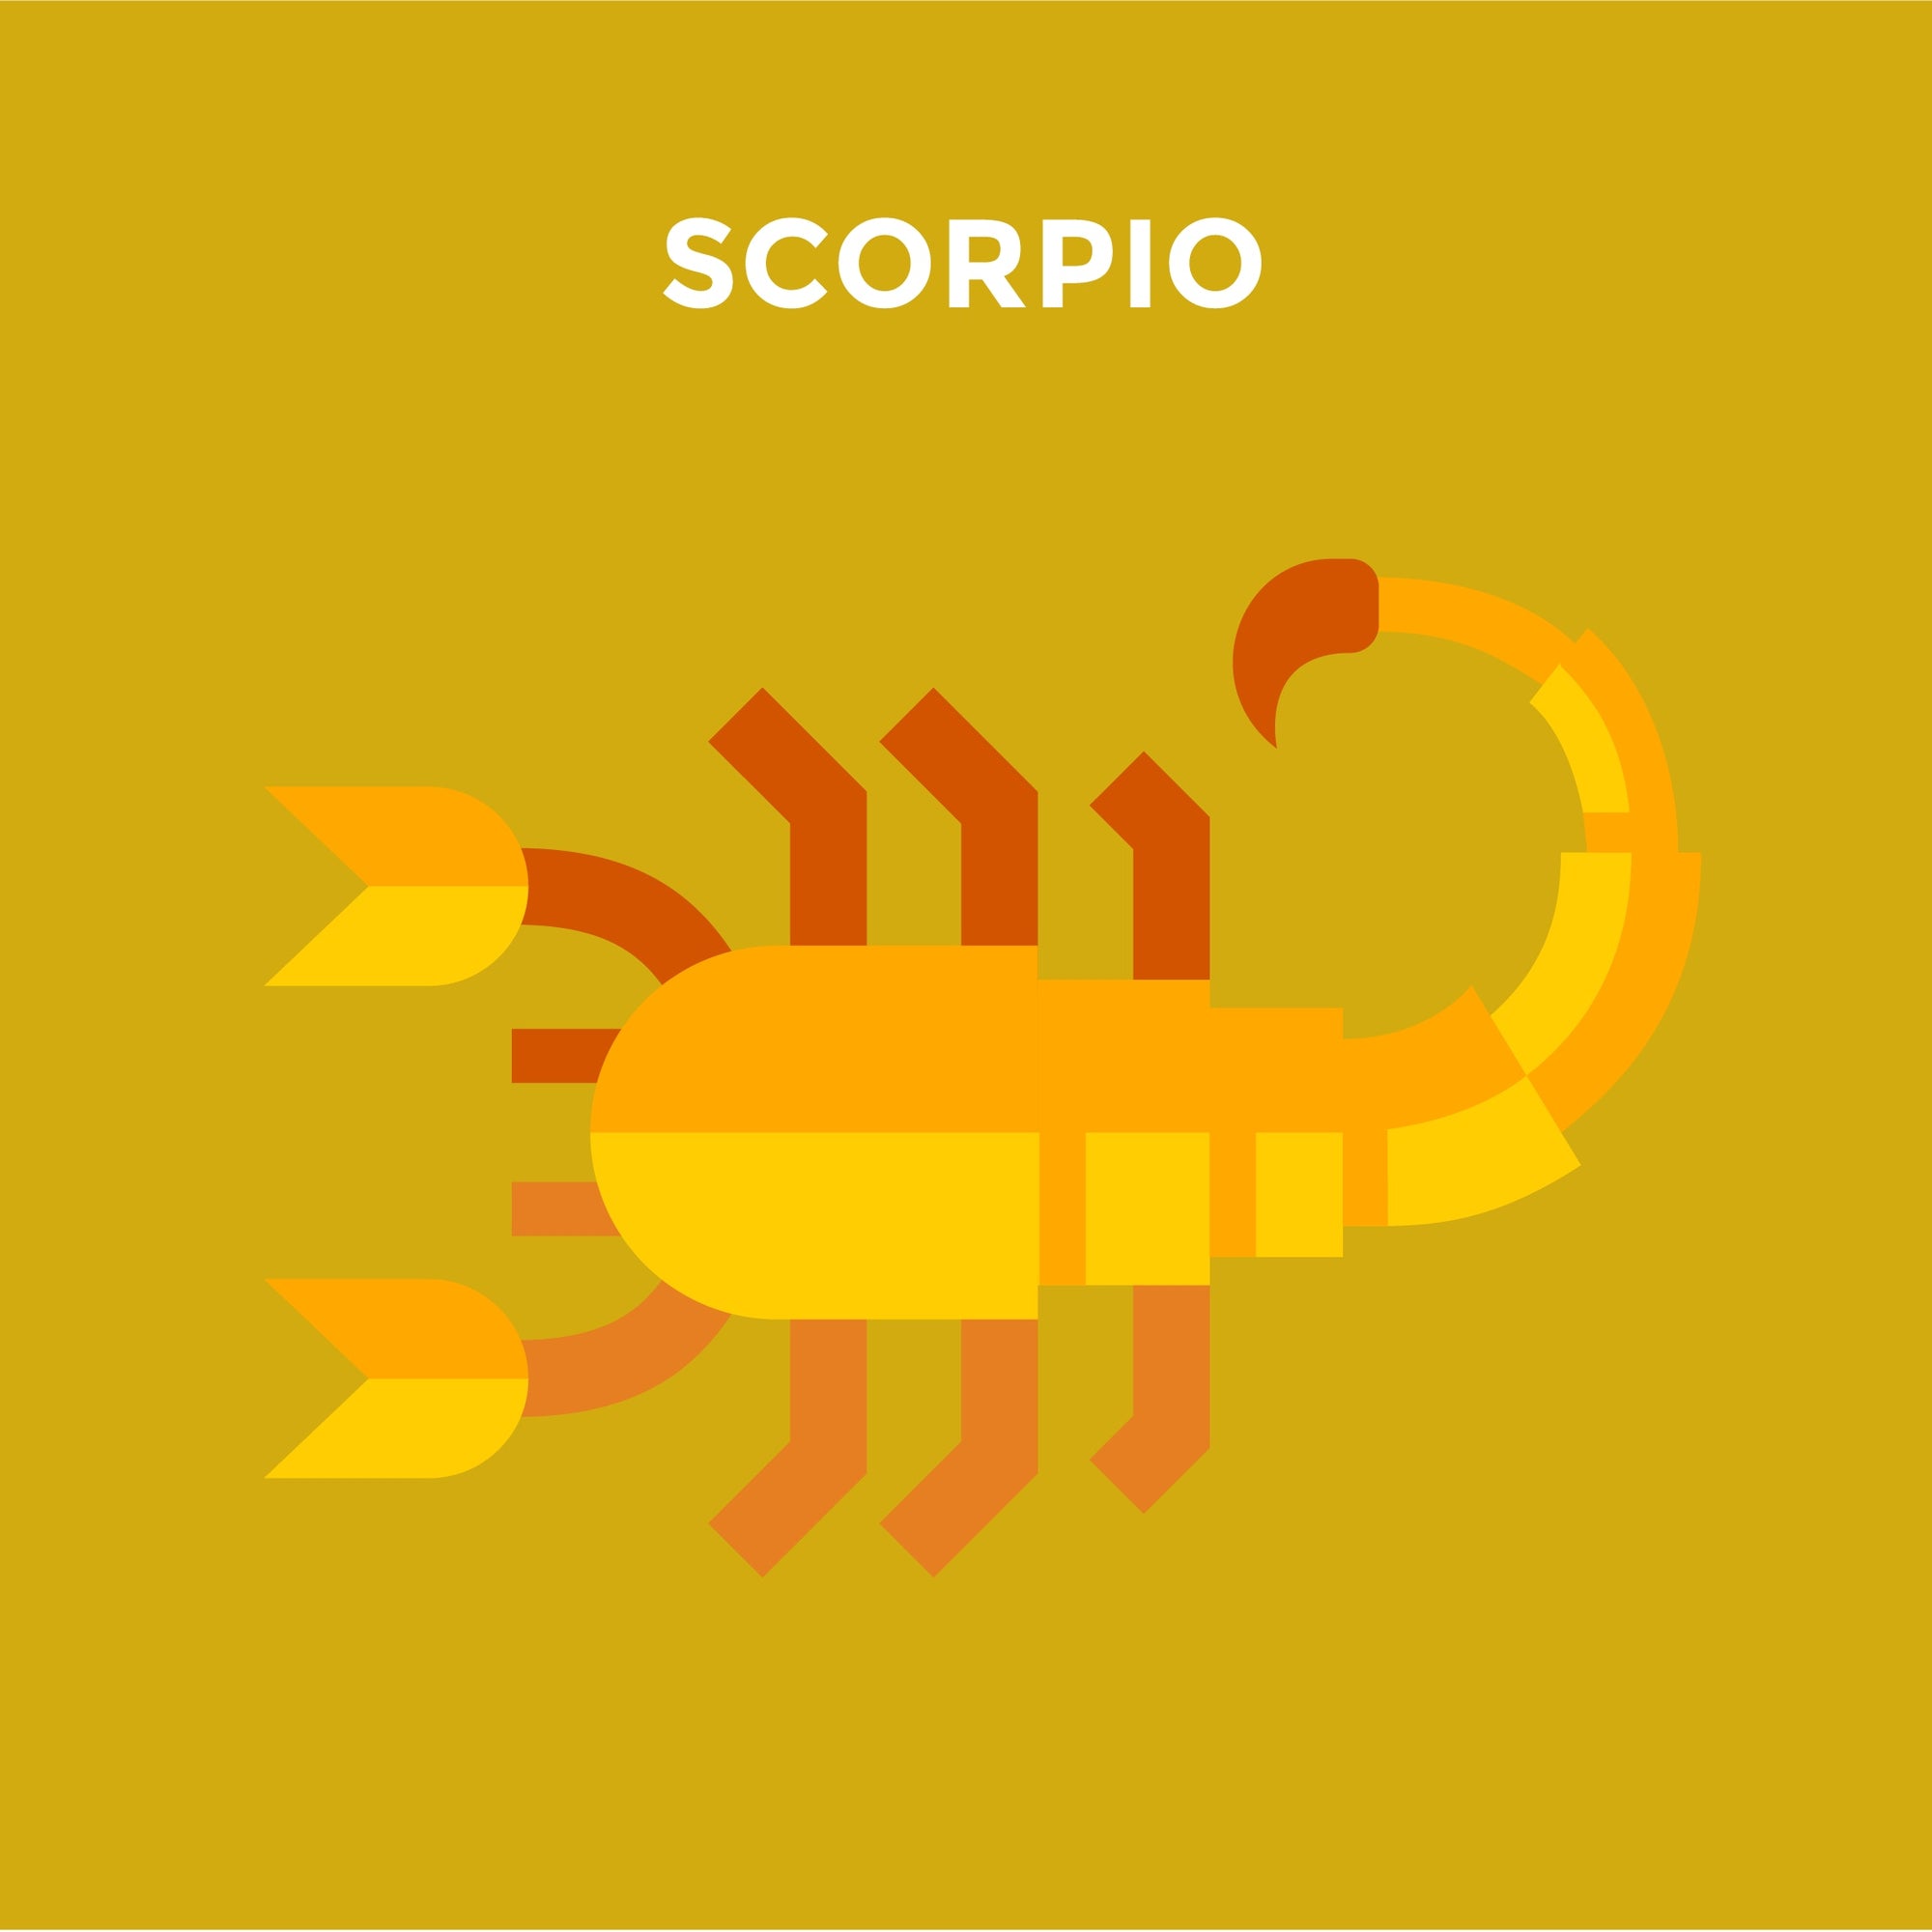 animation of scorpion with caption Scorpio